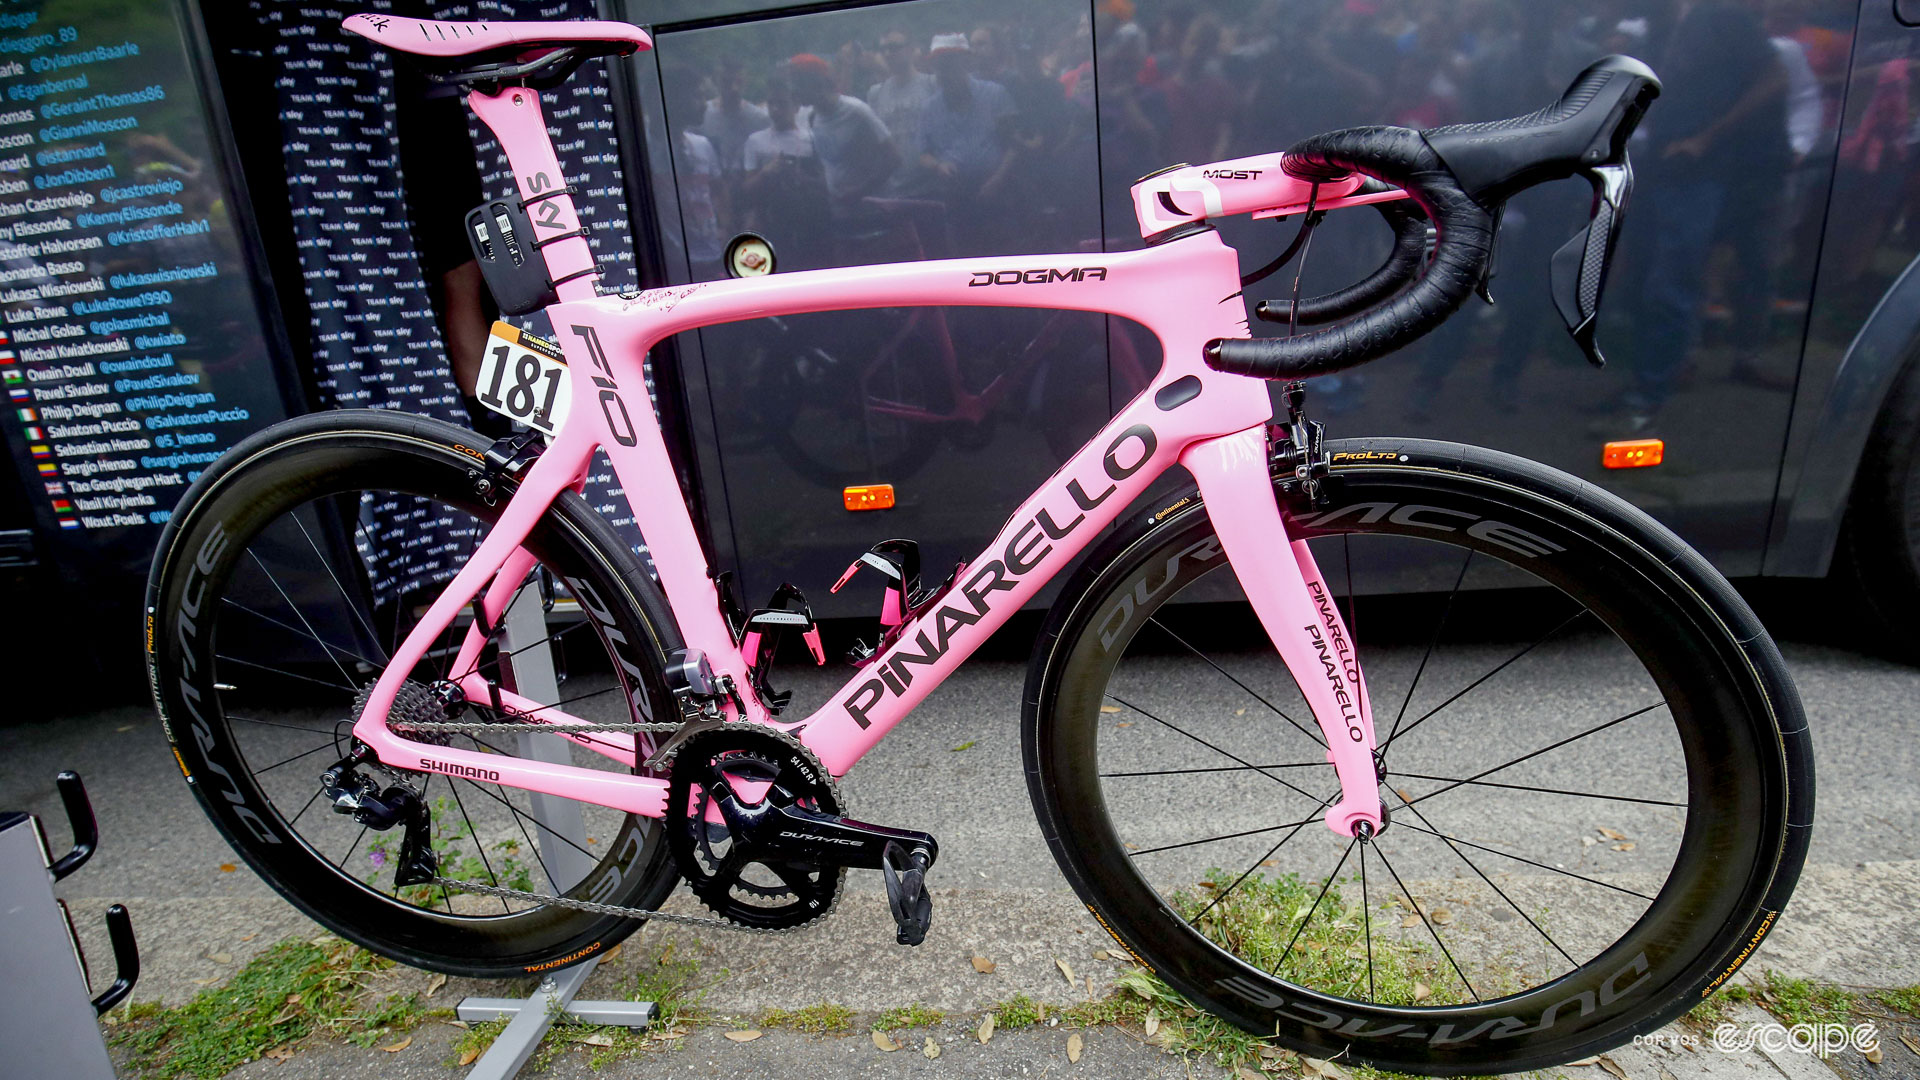 The photo shows Chris Froome's Giro d'Italia winning Pinarello F10